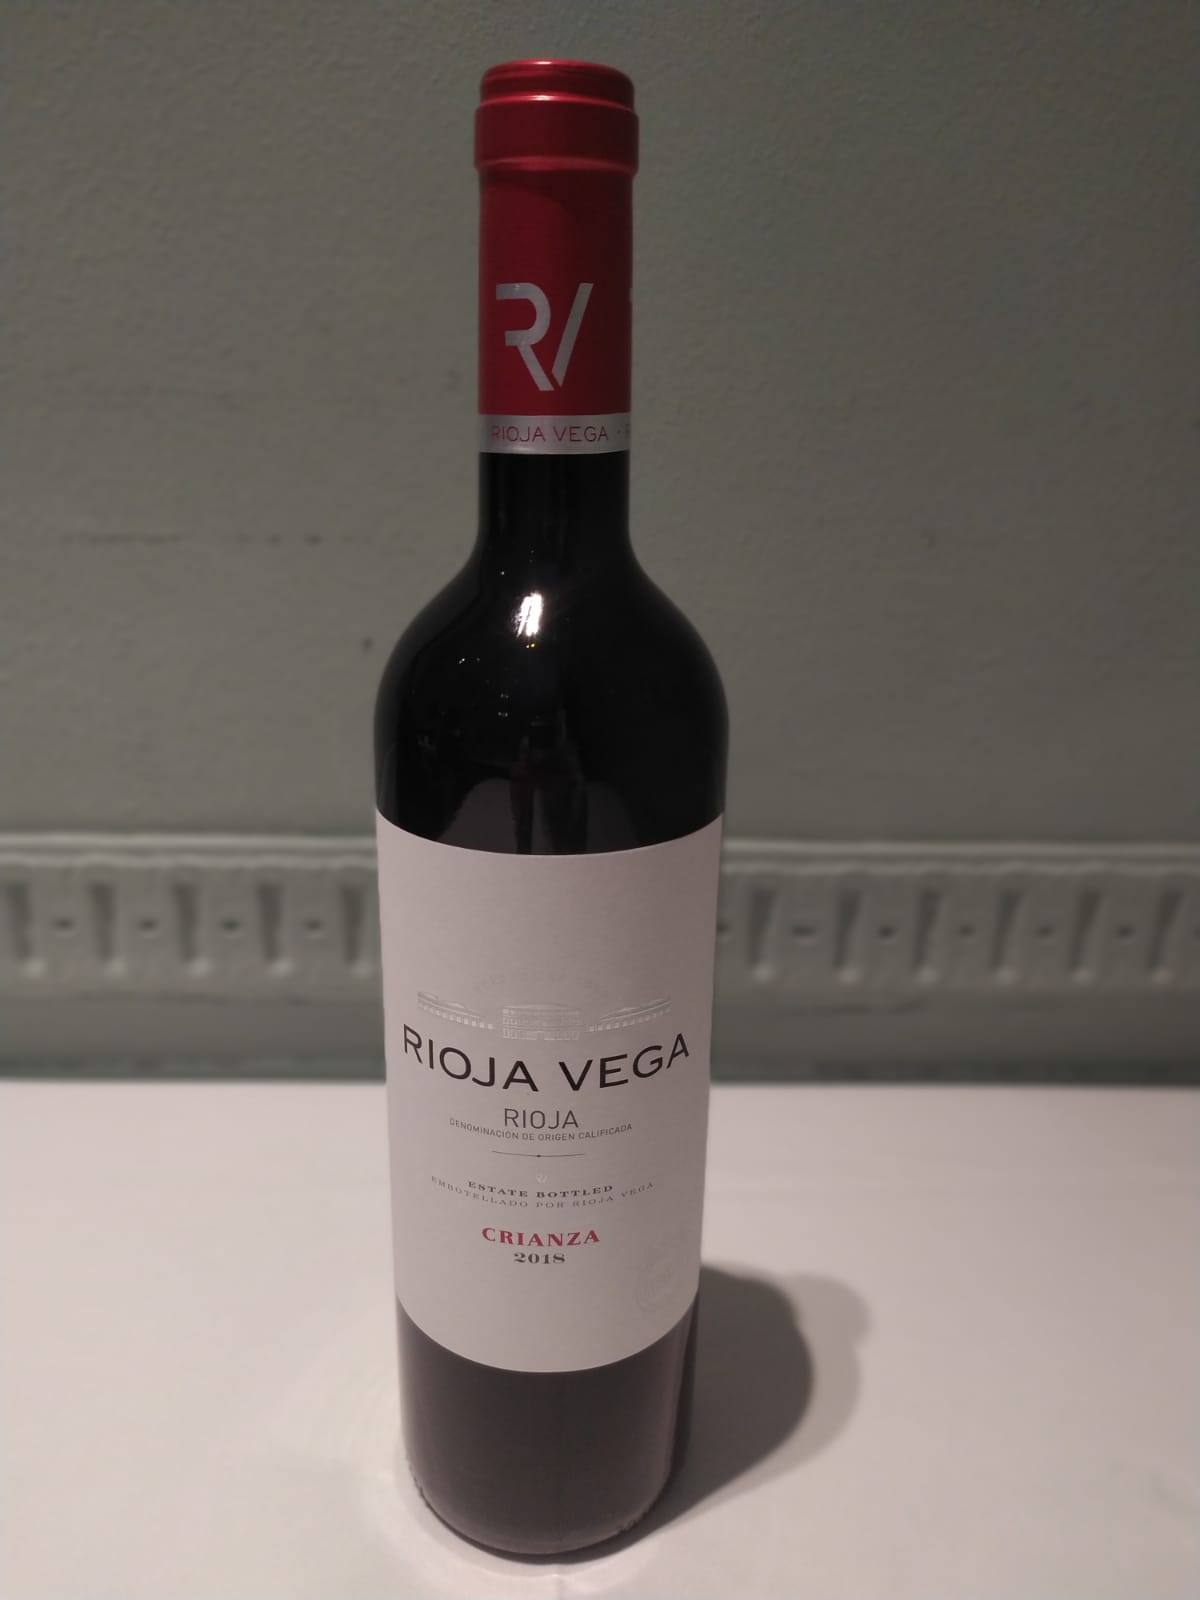 Rioja Vega (当家のすすめ)